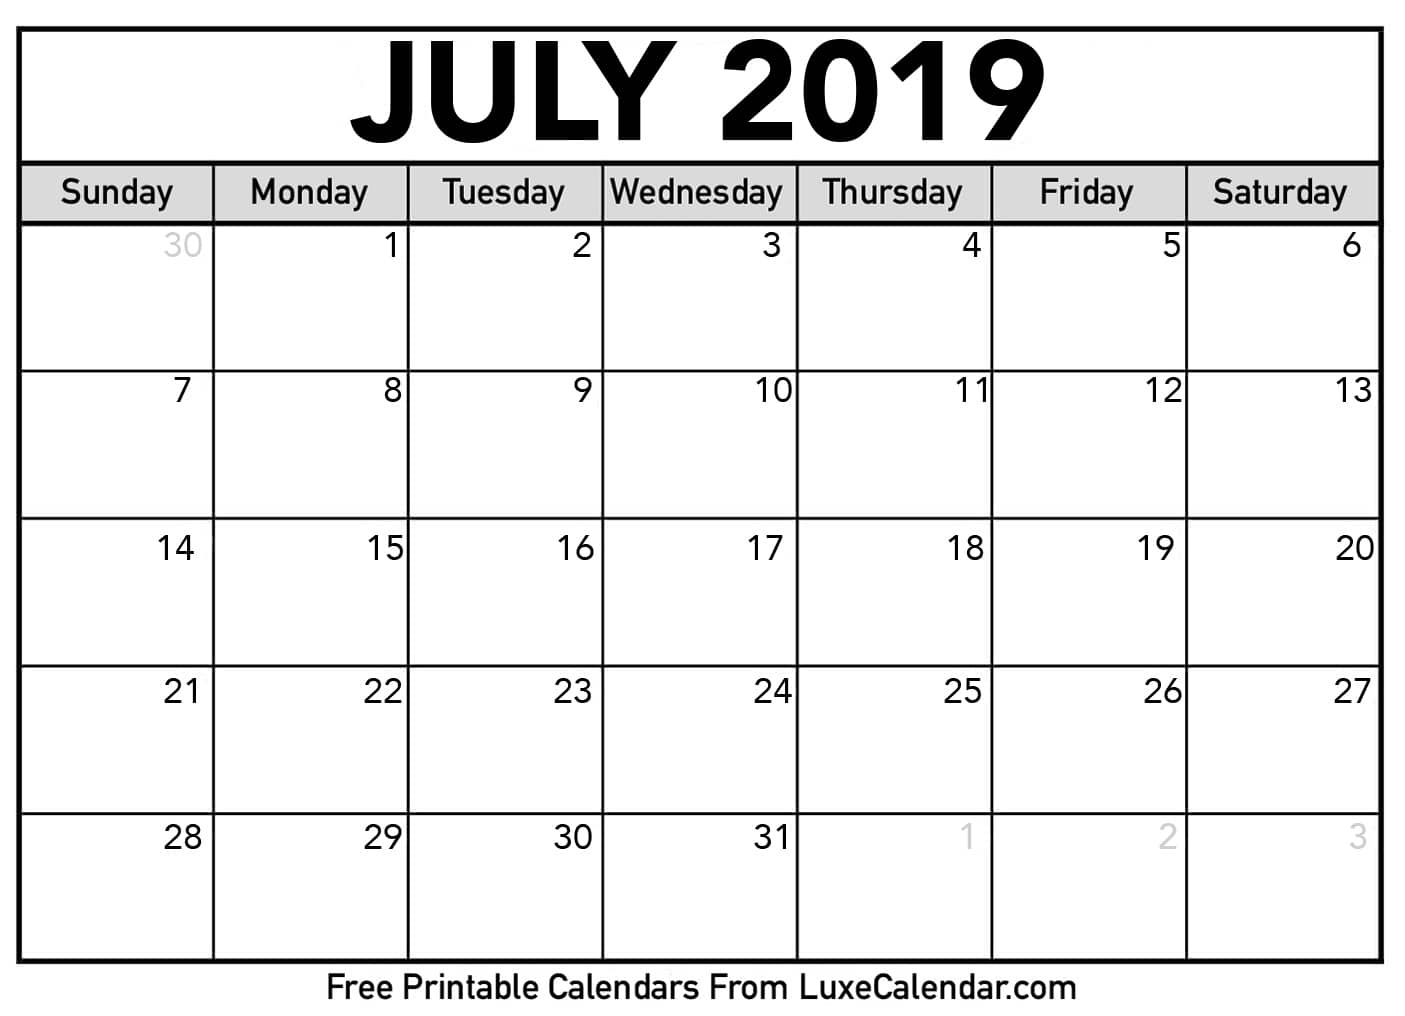 👉 July Calendar 2019 Printable, Editable, A4, Landscape